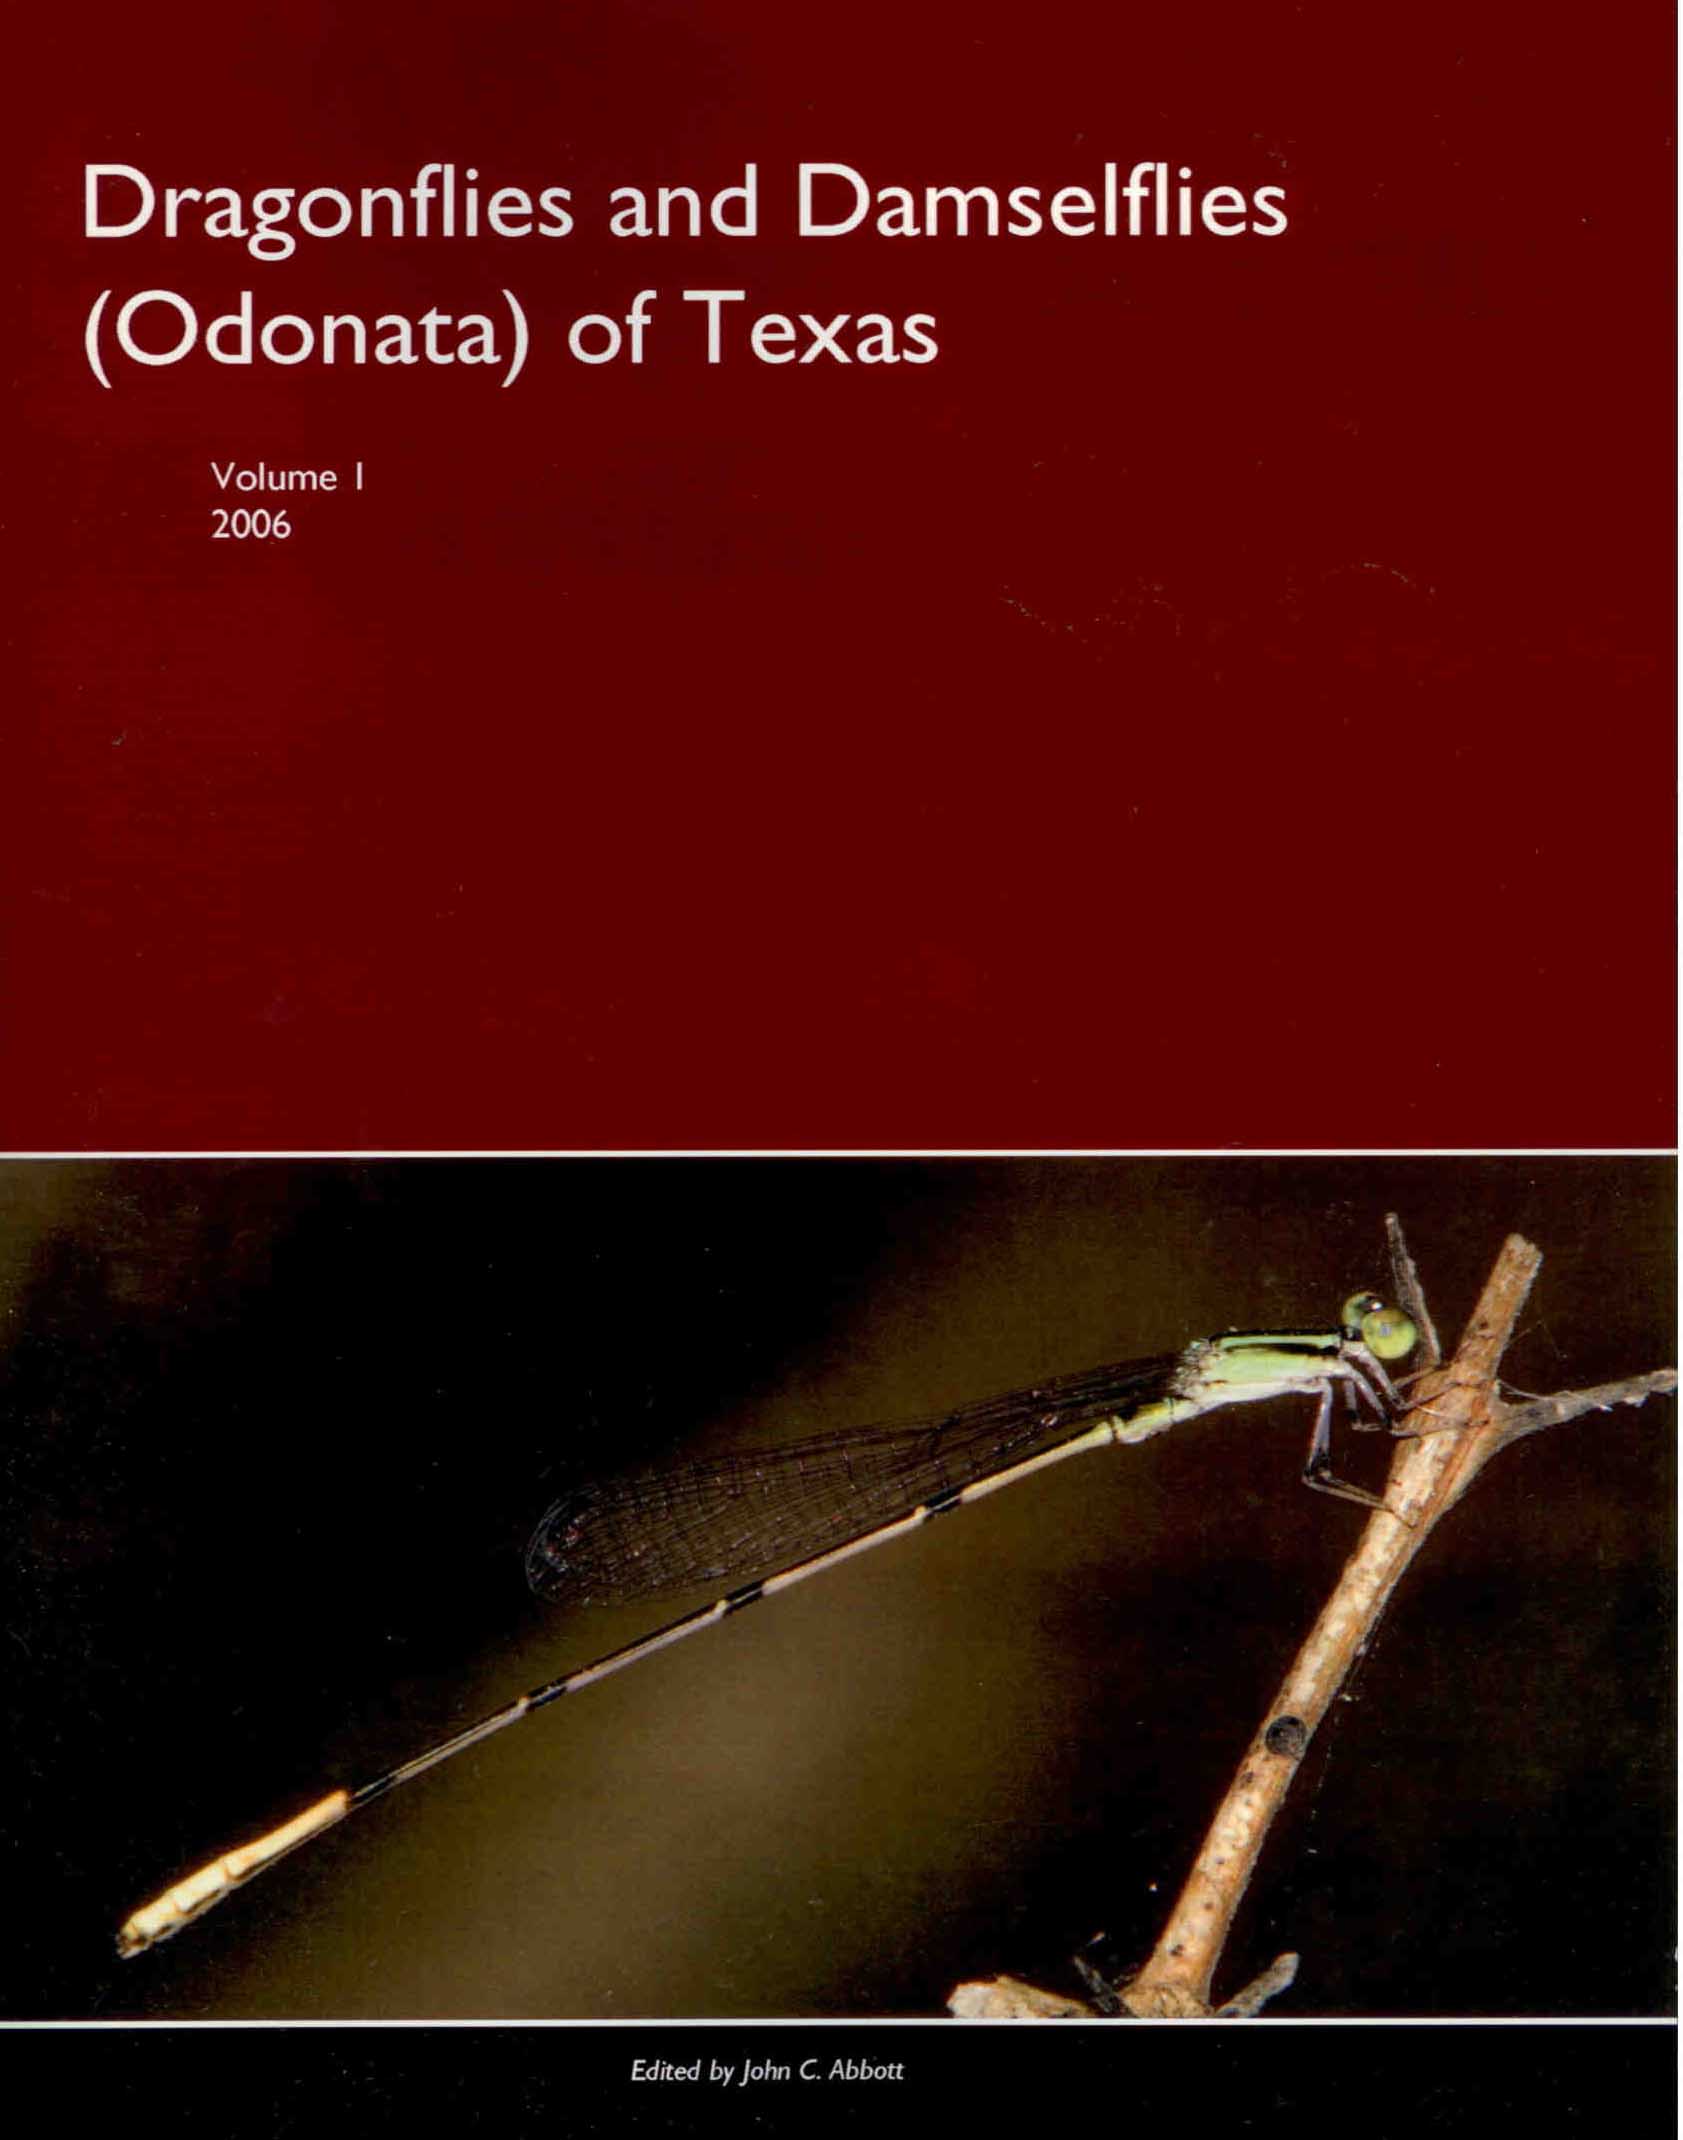 Abbott, J.C. - Dragonflies and Damselflies (Odonata) of Texas. Vol. 1